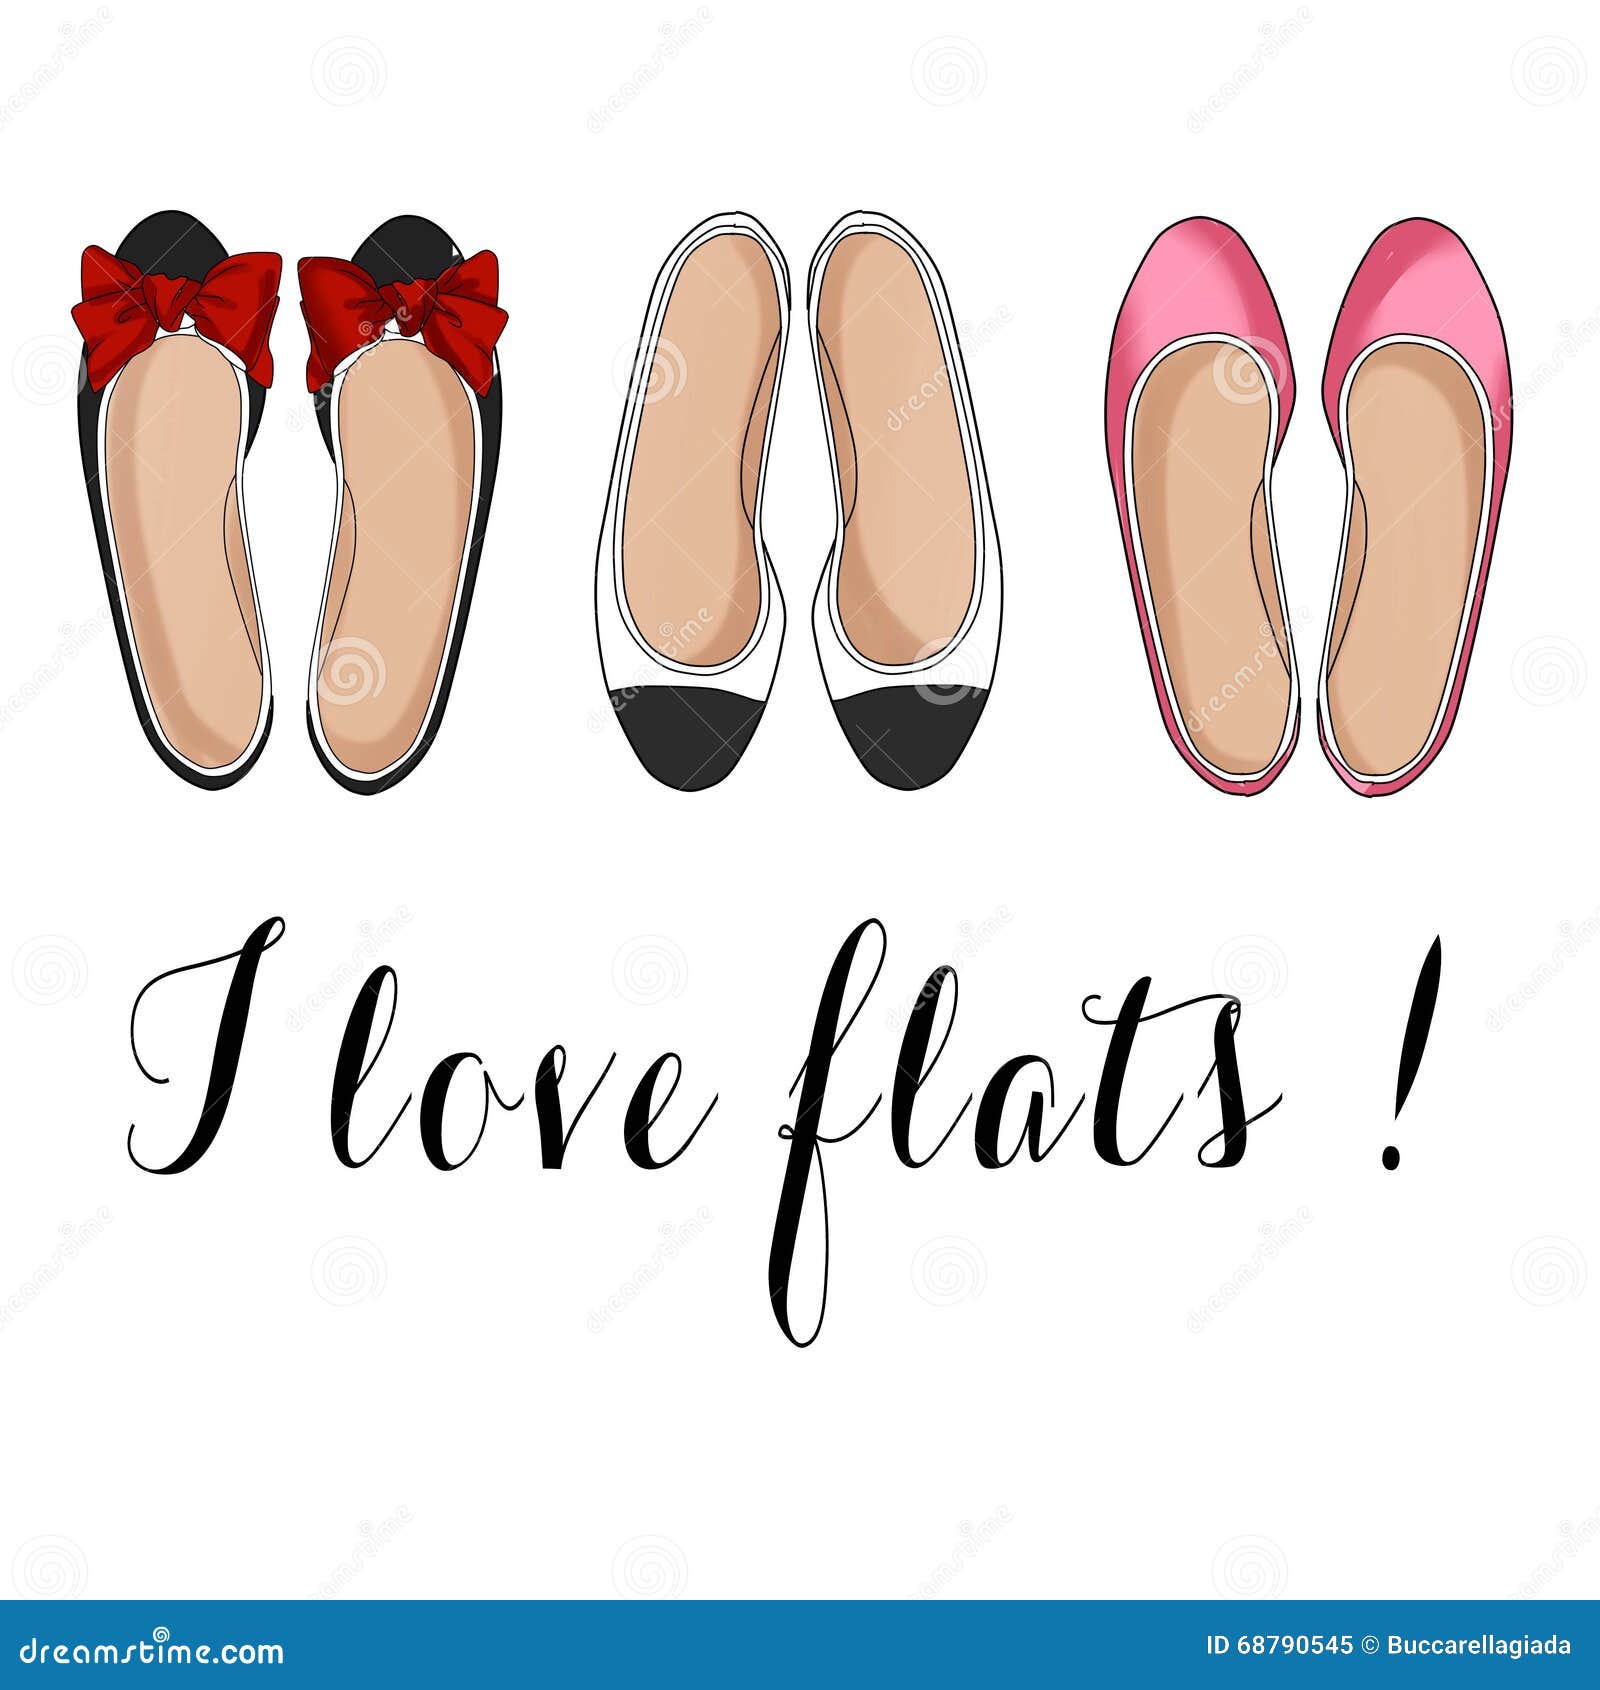 Ultimate breakfast call Flat shoes stock illustration. Illustration of shoe, elegance - 68790545